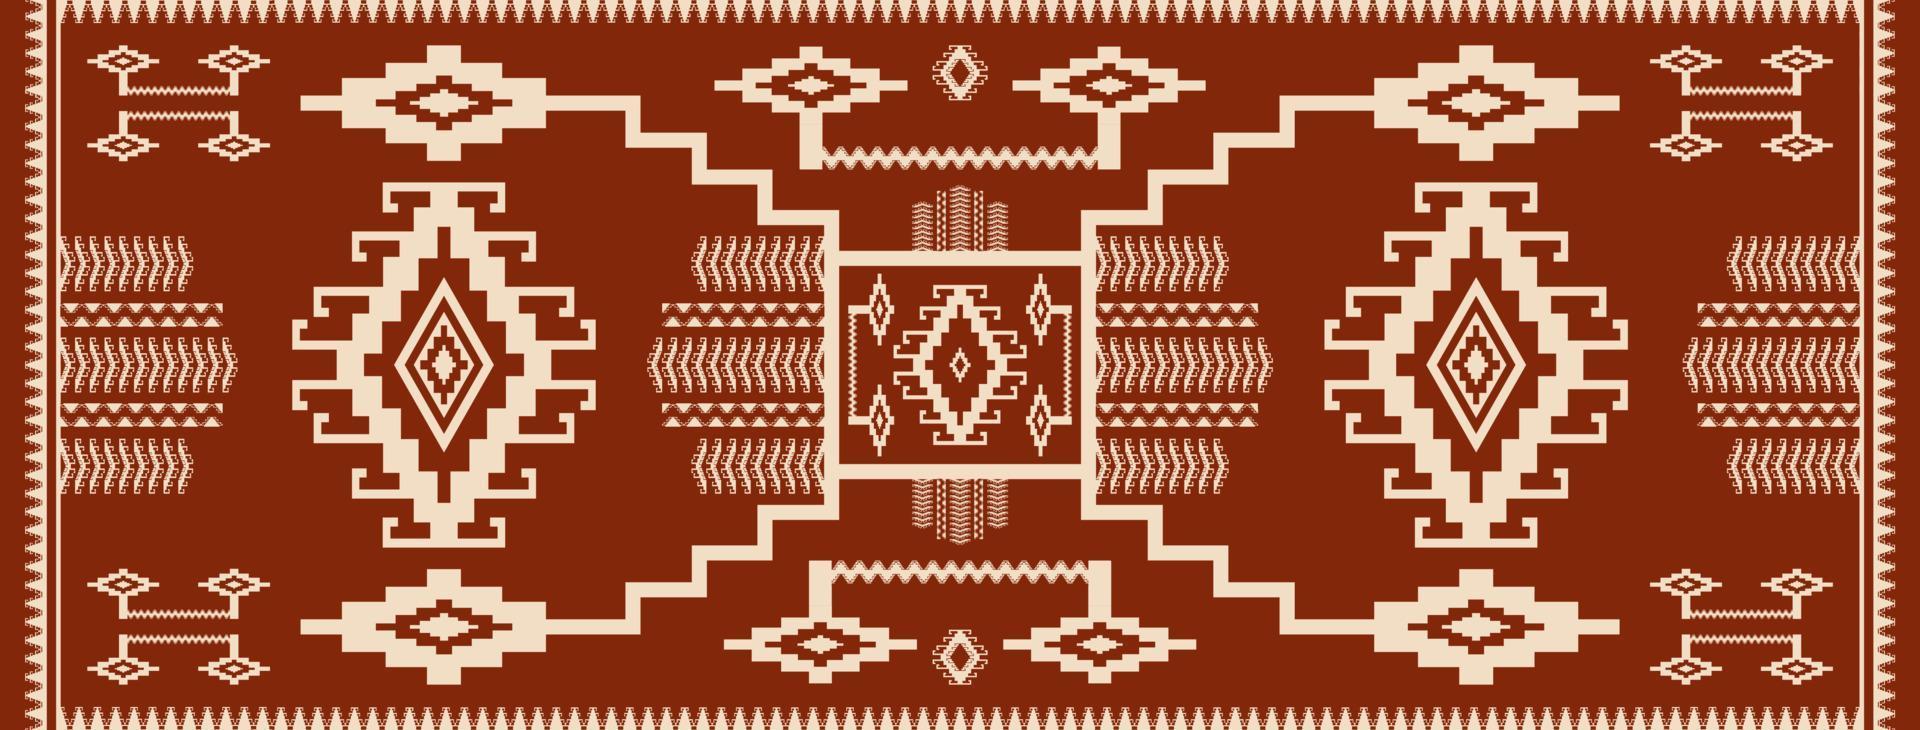 Ethnic runner geometric pattern. Brown ethnic southwestern rug. Brown native aztec Kilim geometric style rug. Ethnic geometric pattern use for home decoration or runner decorative elements. vector